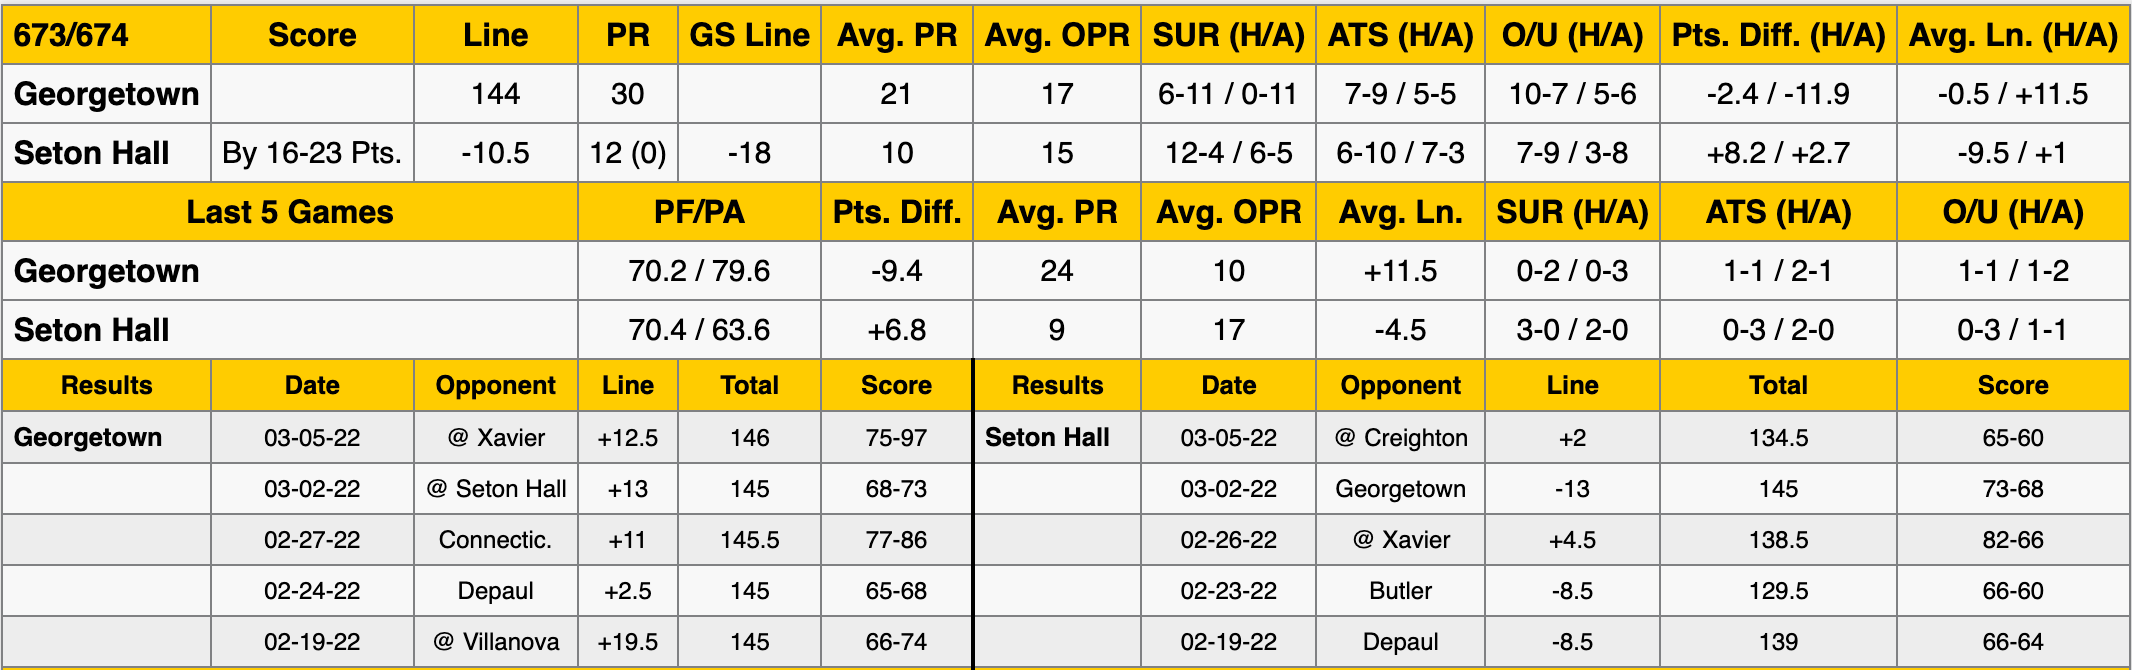 Georgetown vs Seton Hall Stats